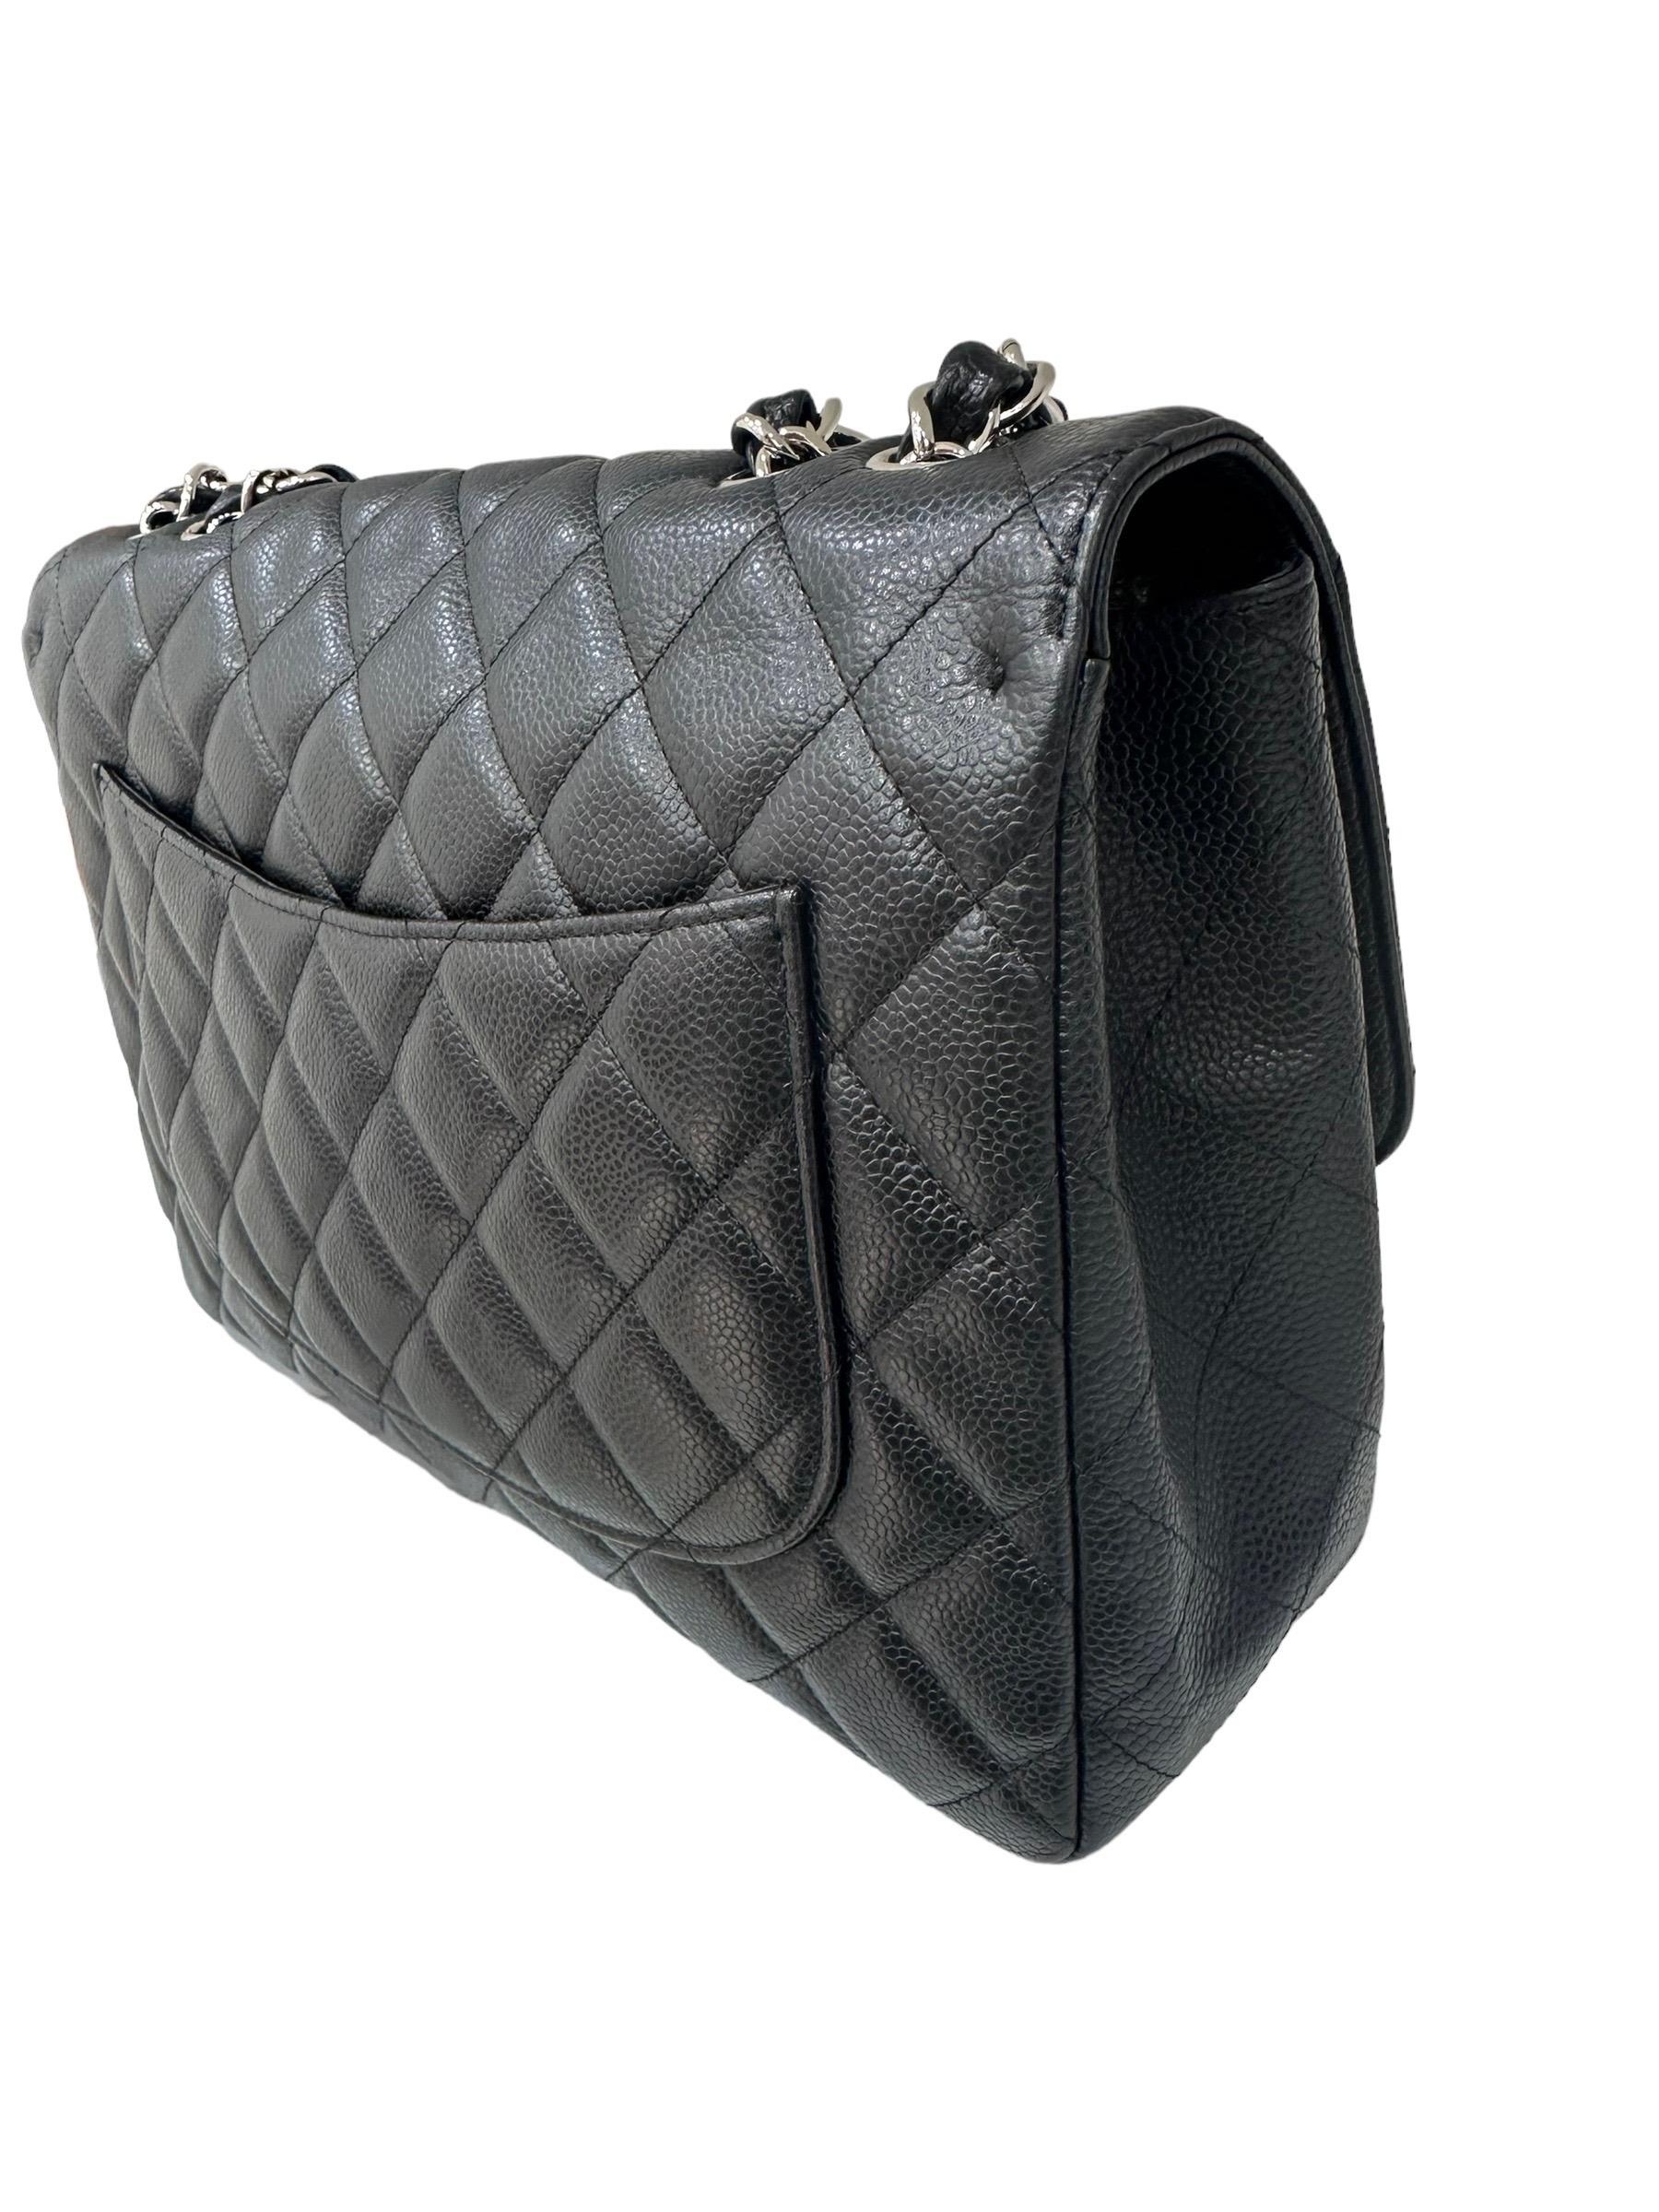 2009 Chanel Jumbo Black Caviar Leather Top Shoulder Bag  For Sale 6